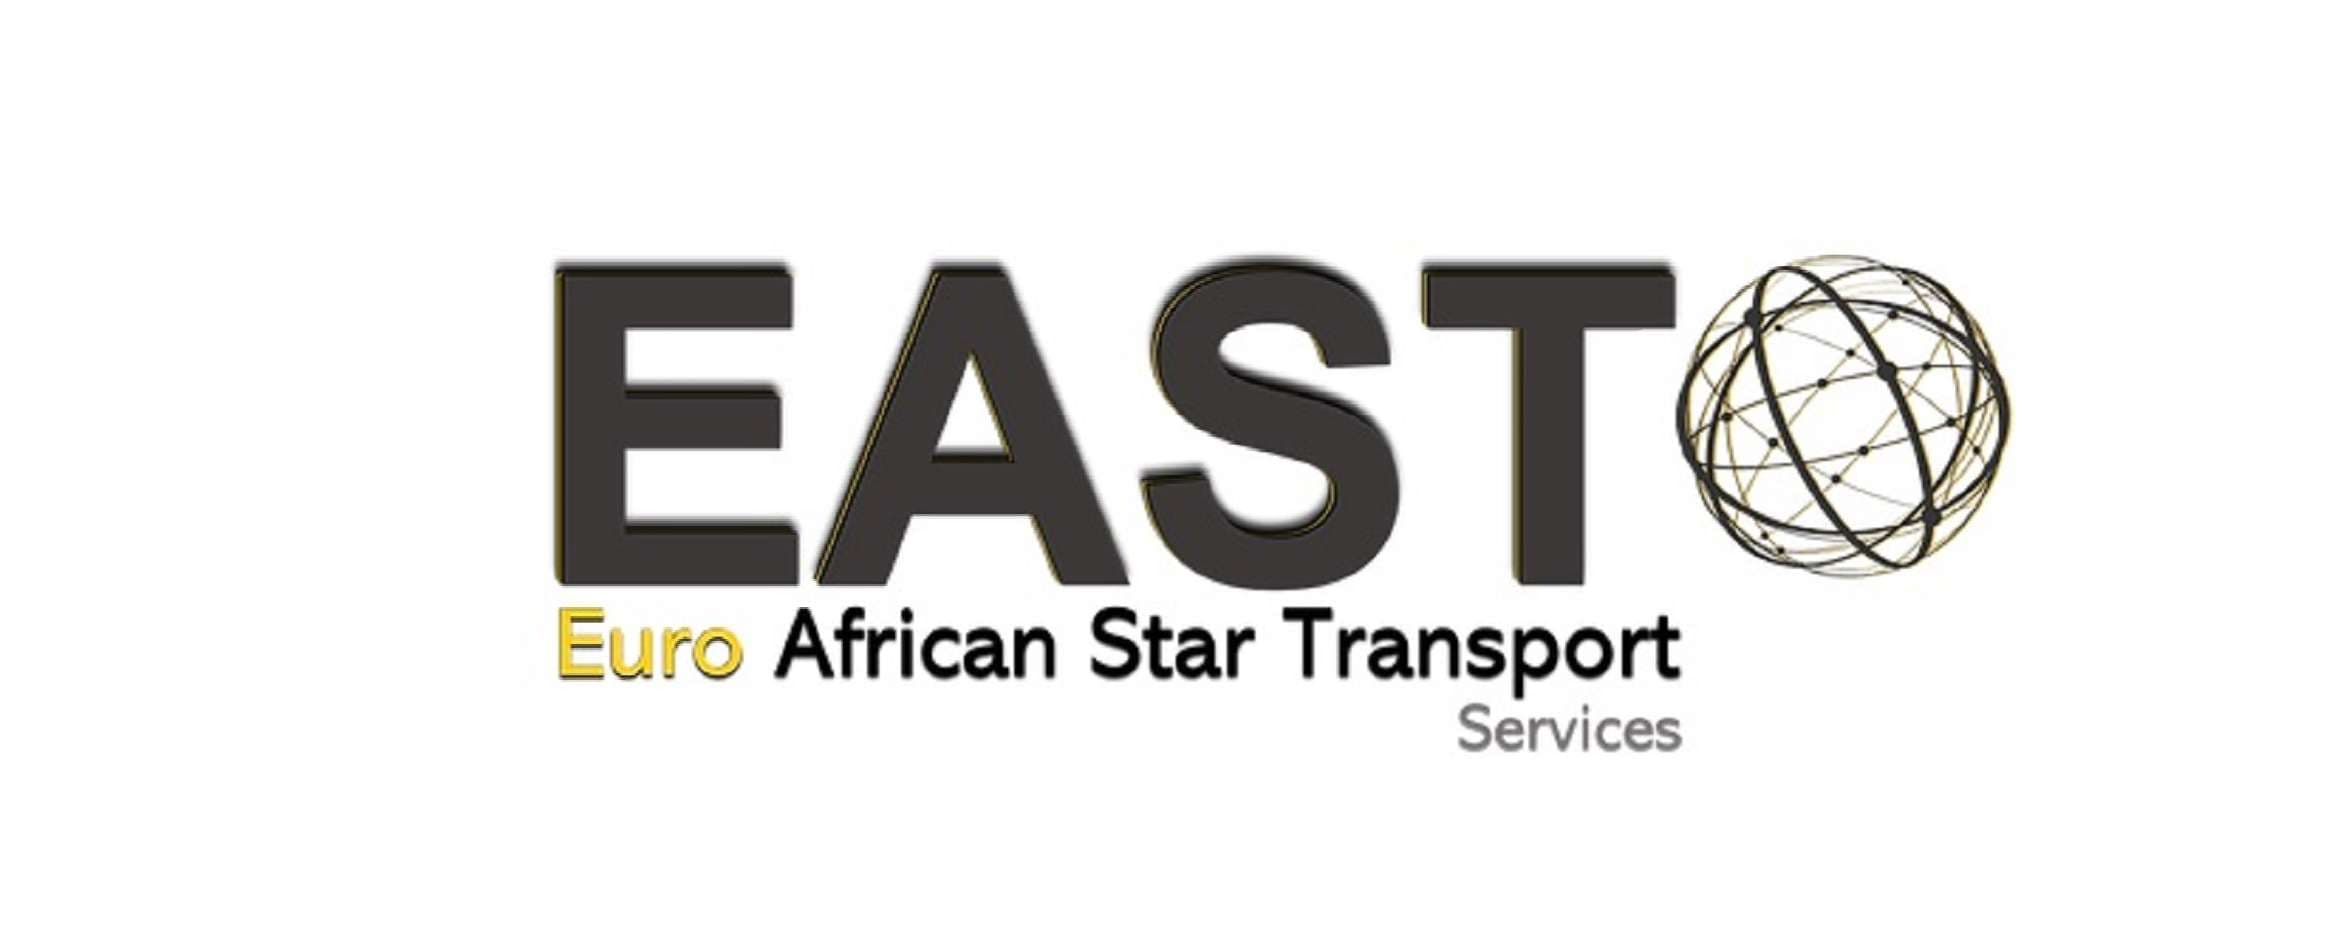 East Euro Africa Star Transport